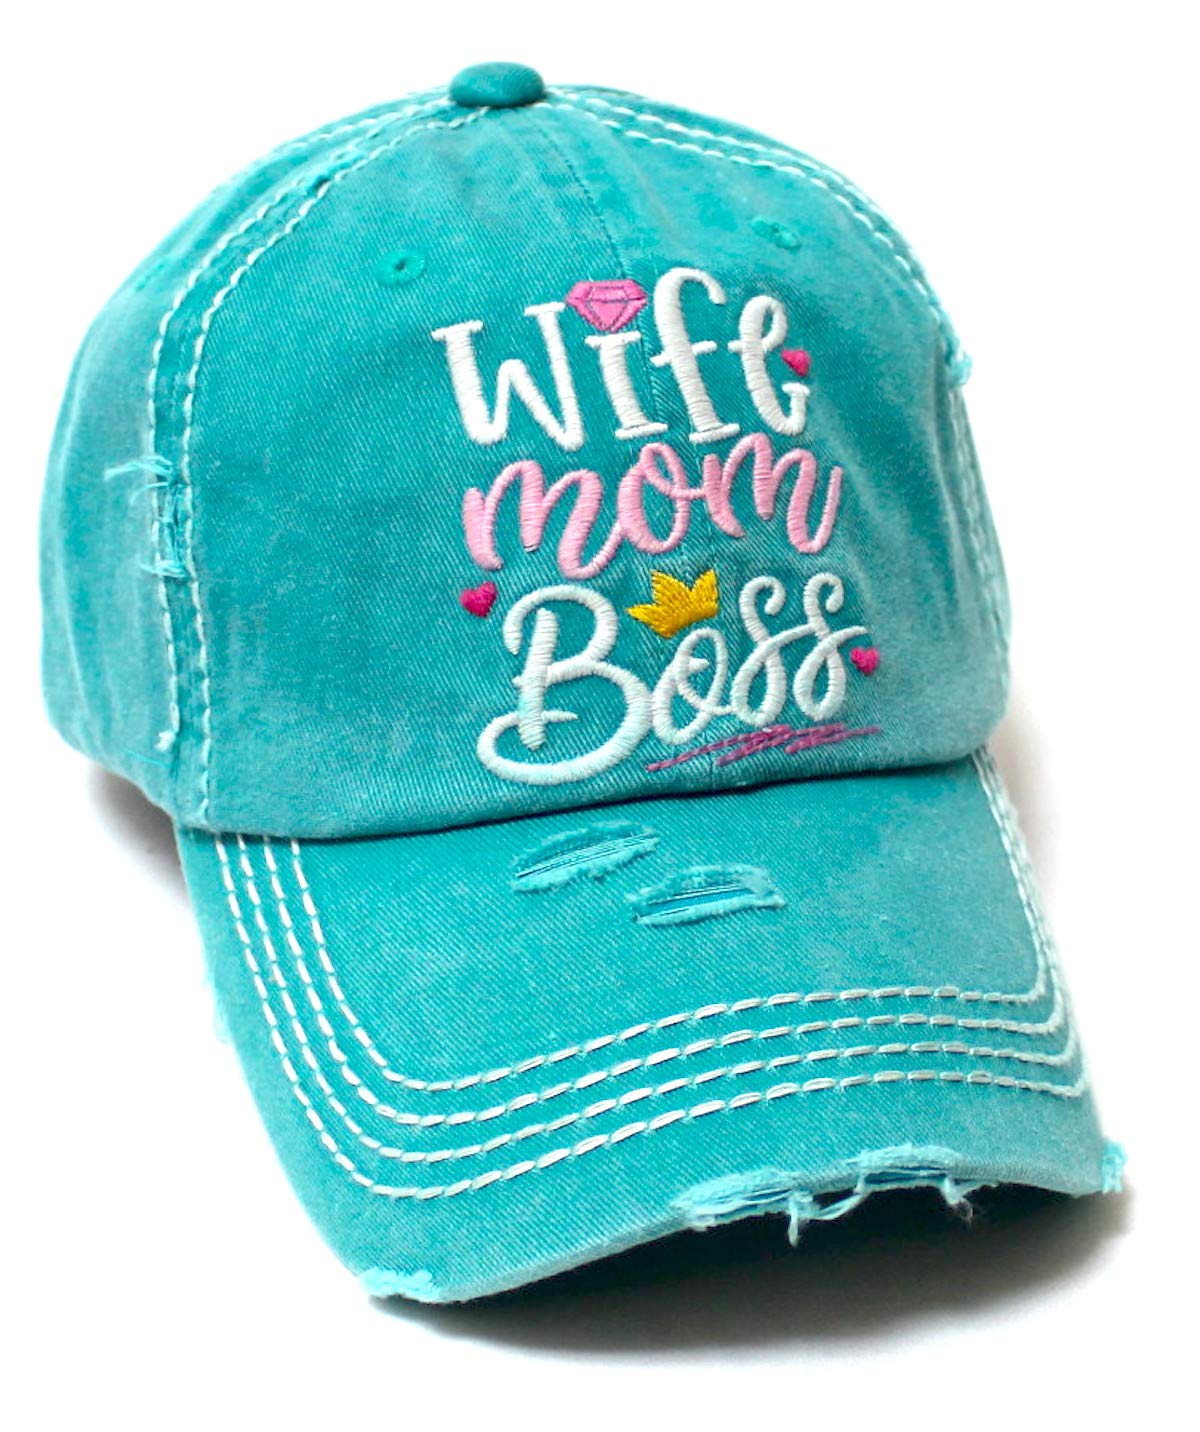 Women's Vintage Baseball Cap Wife, Mom, Boss Crown Diamond Hearts Monogram Embroidery Hat, Beach Turquoise